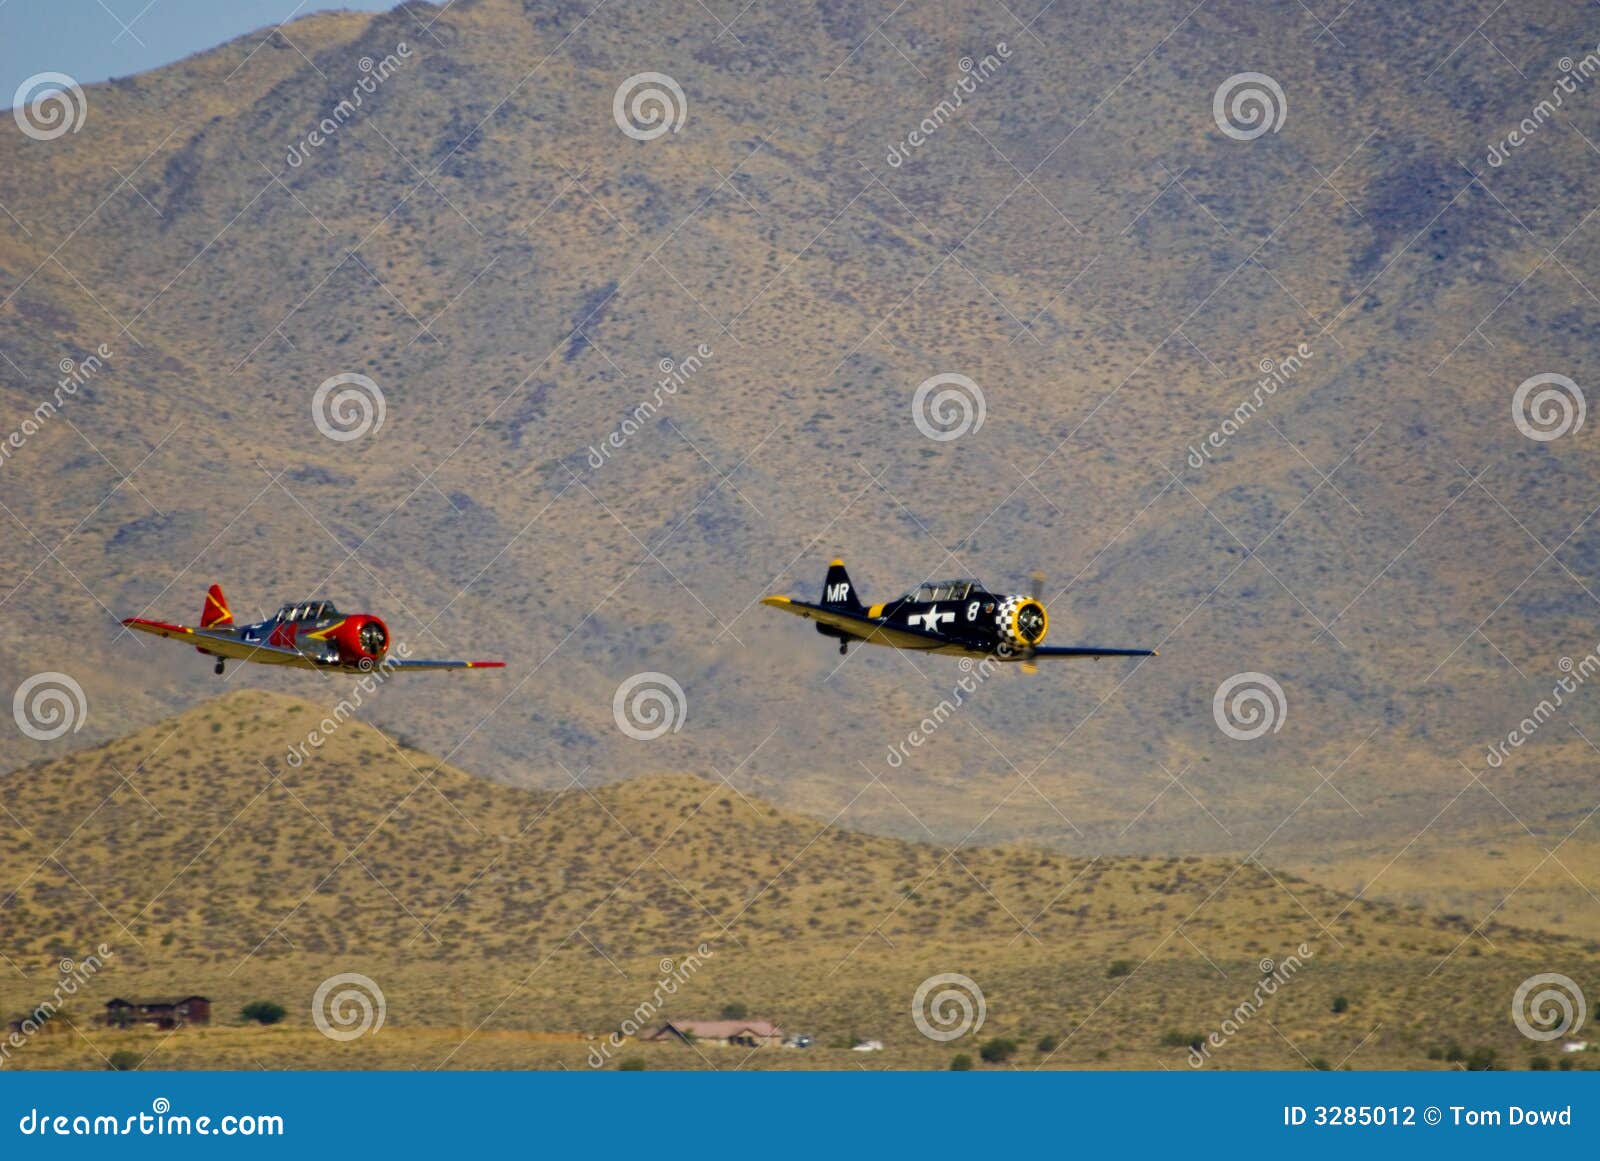 War Birds In Flight Picture. Image: 3285012